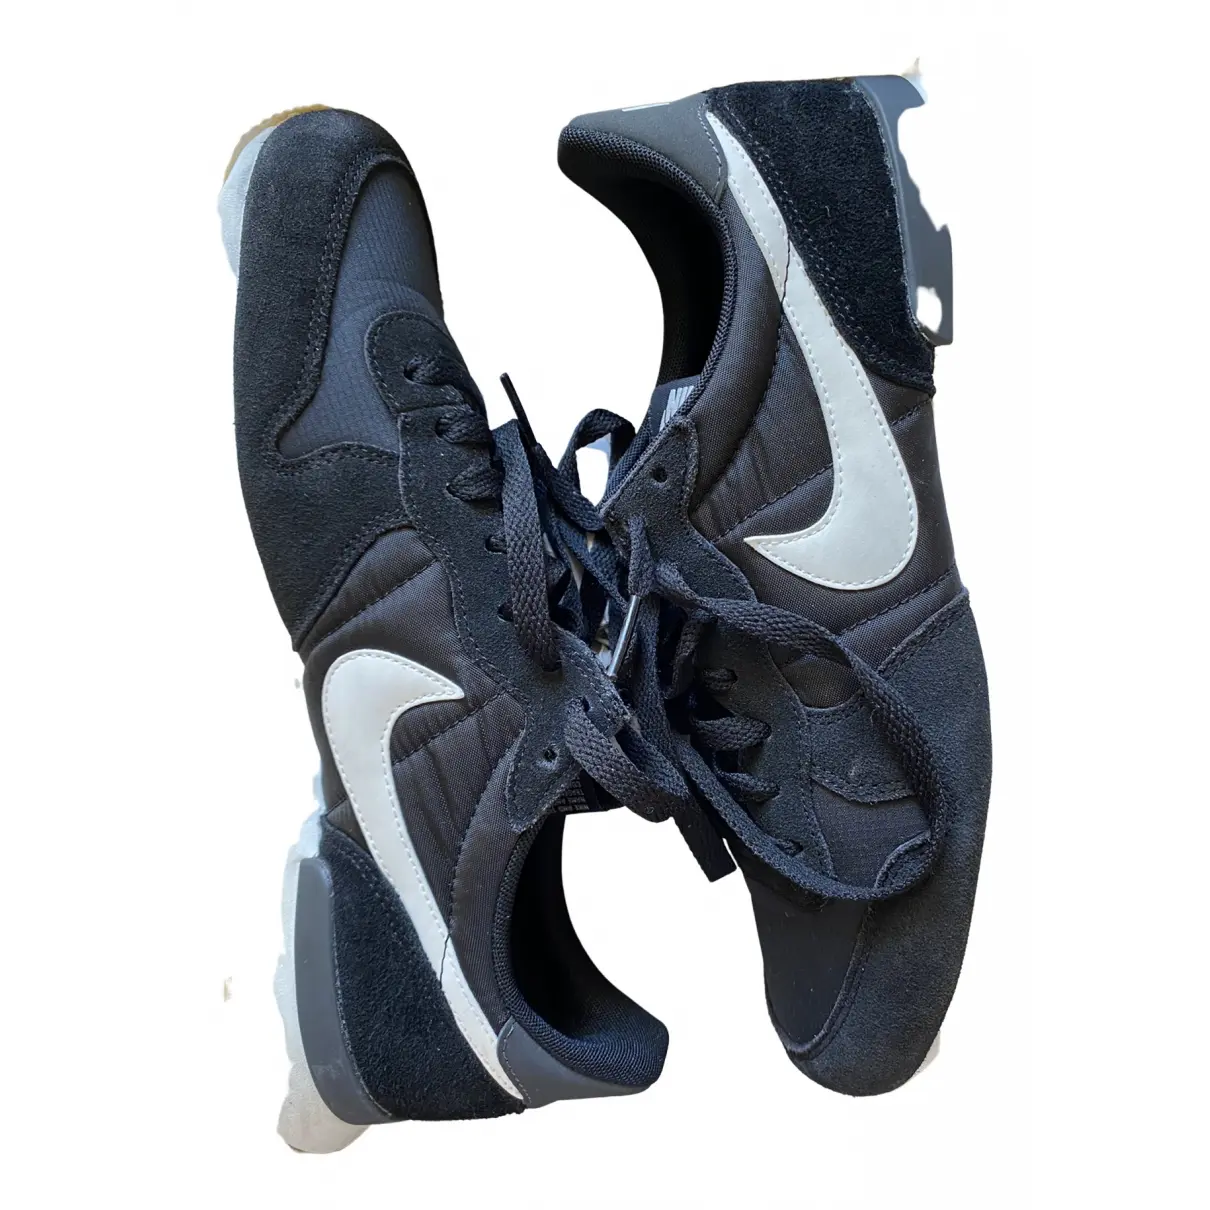 Buy Nike Internationalist trainers online